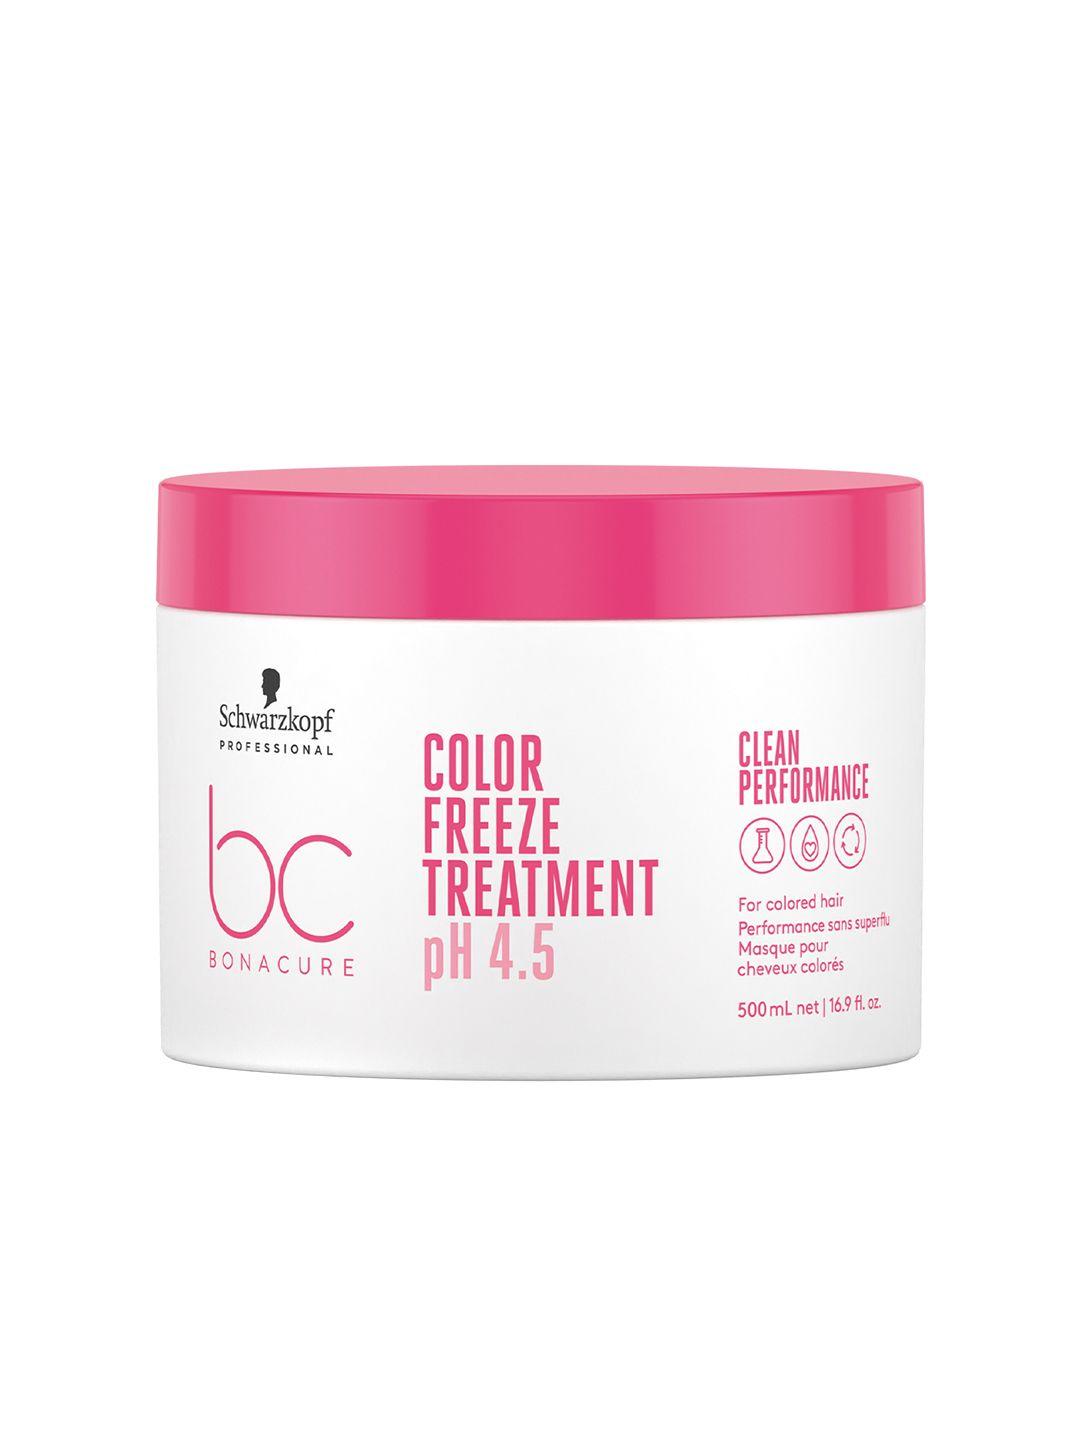 schwarzkopf professional bonacure color freeze treatment ph 4.5 hair mask - 500ml